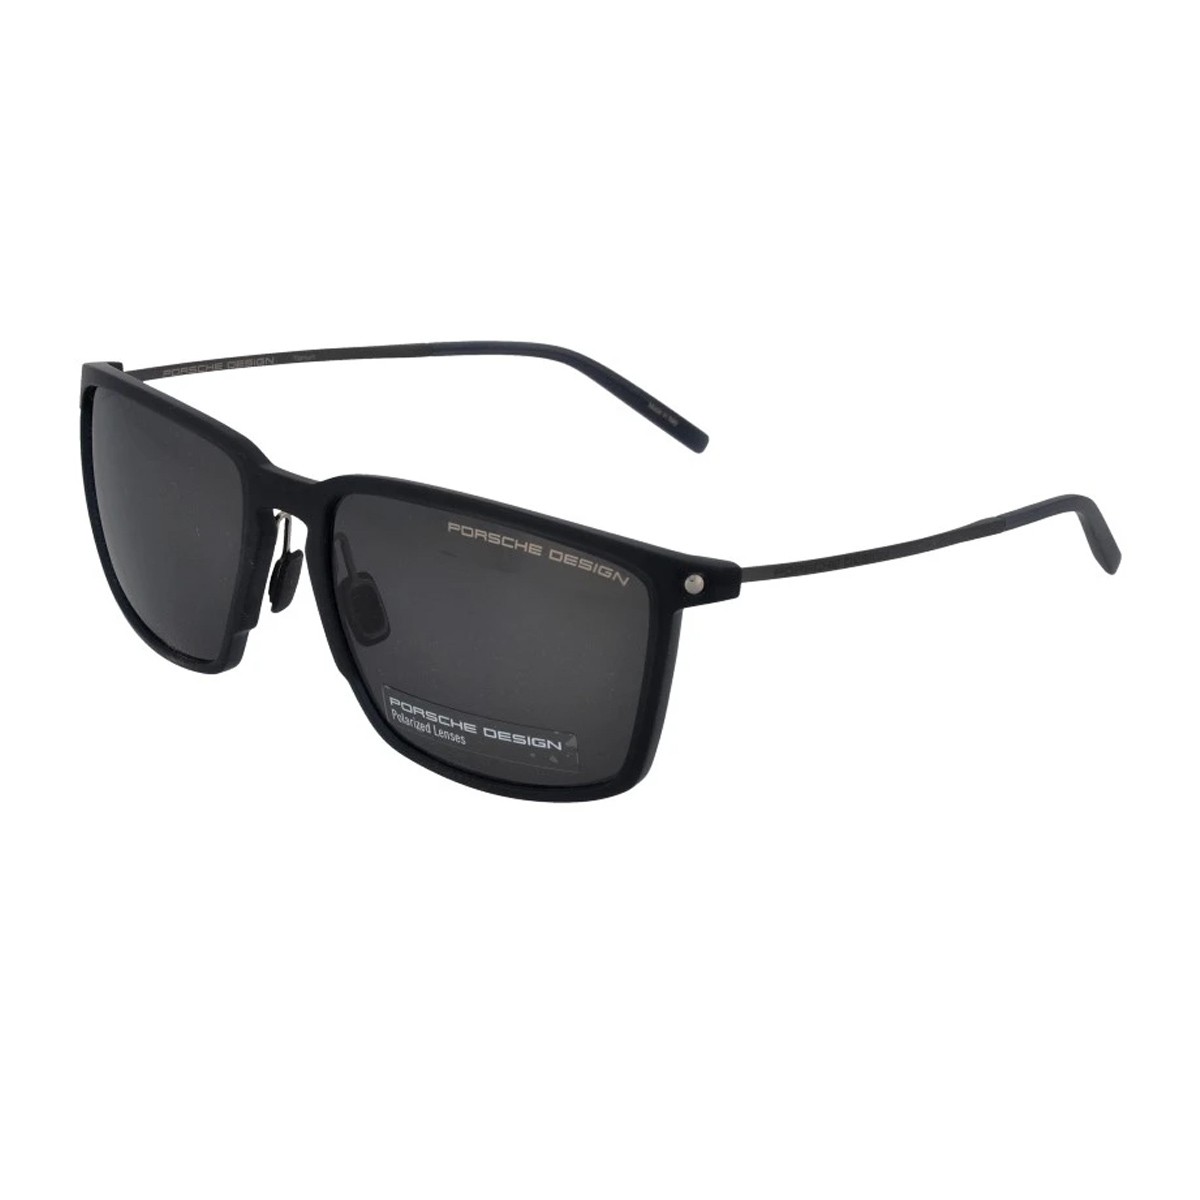 Porsche Design P8661 | Men's sunglasses